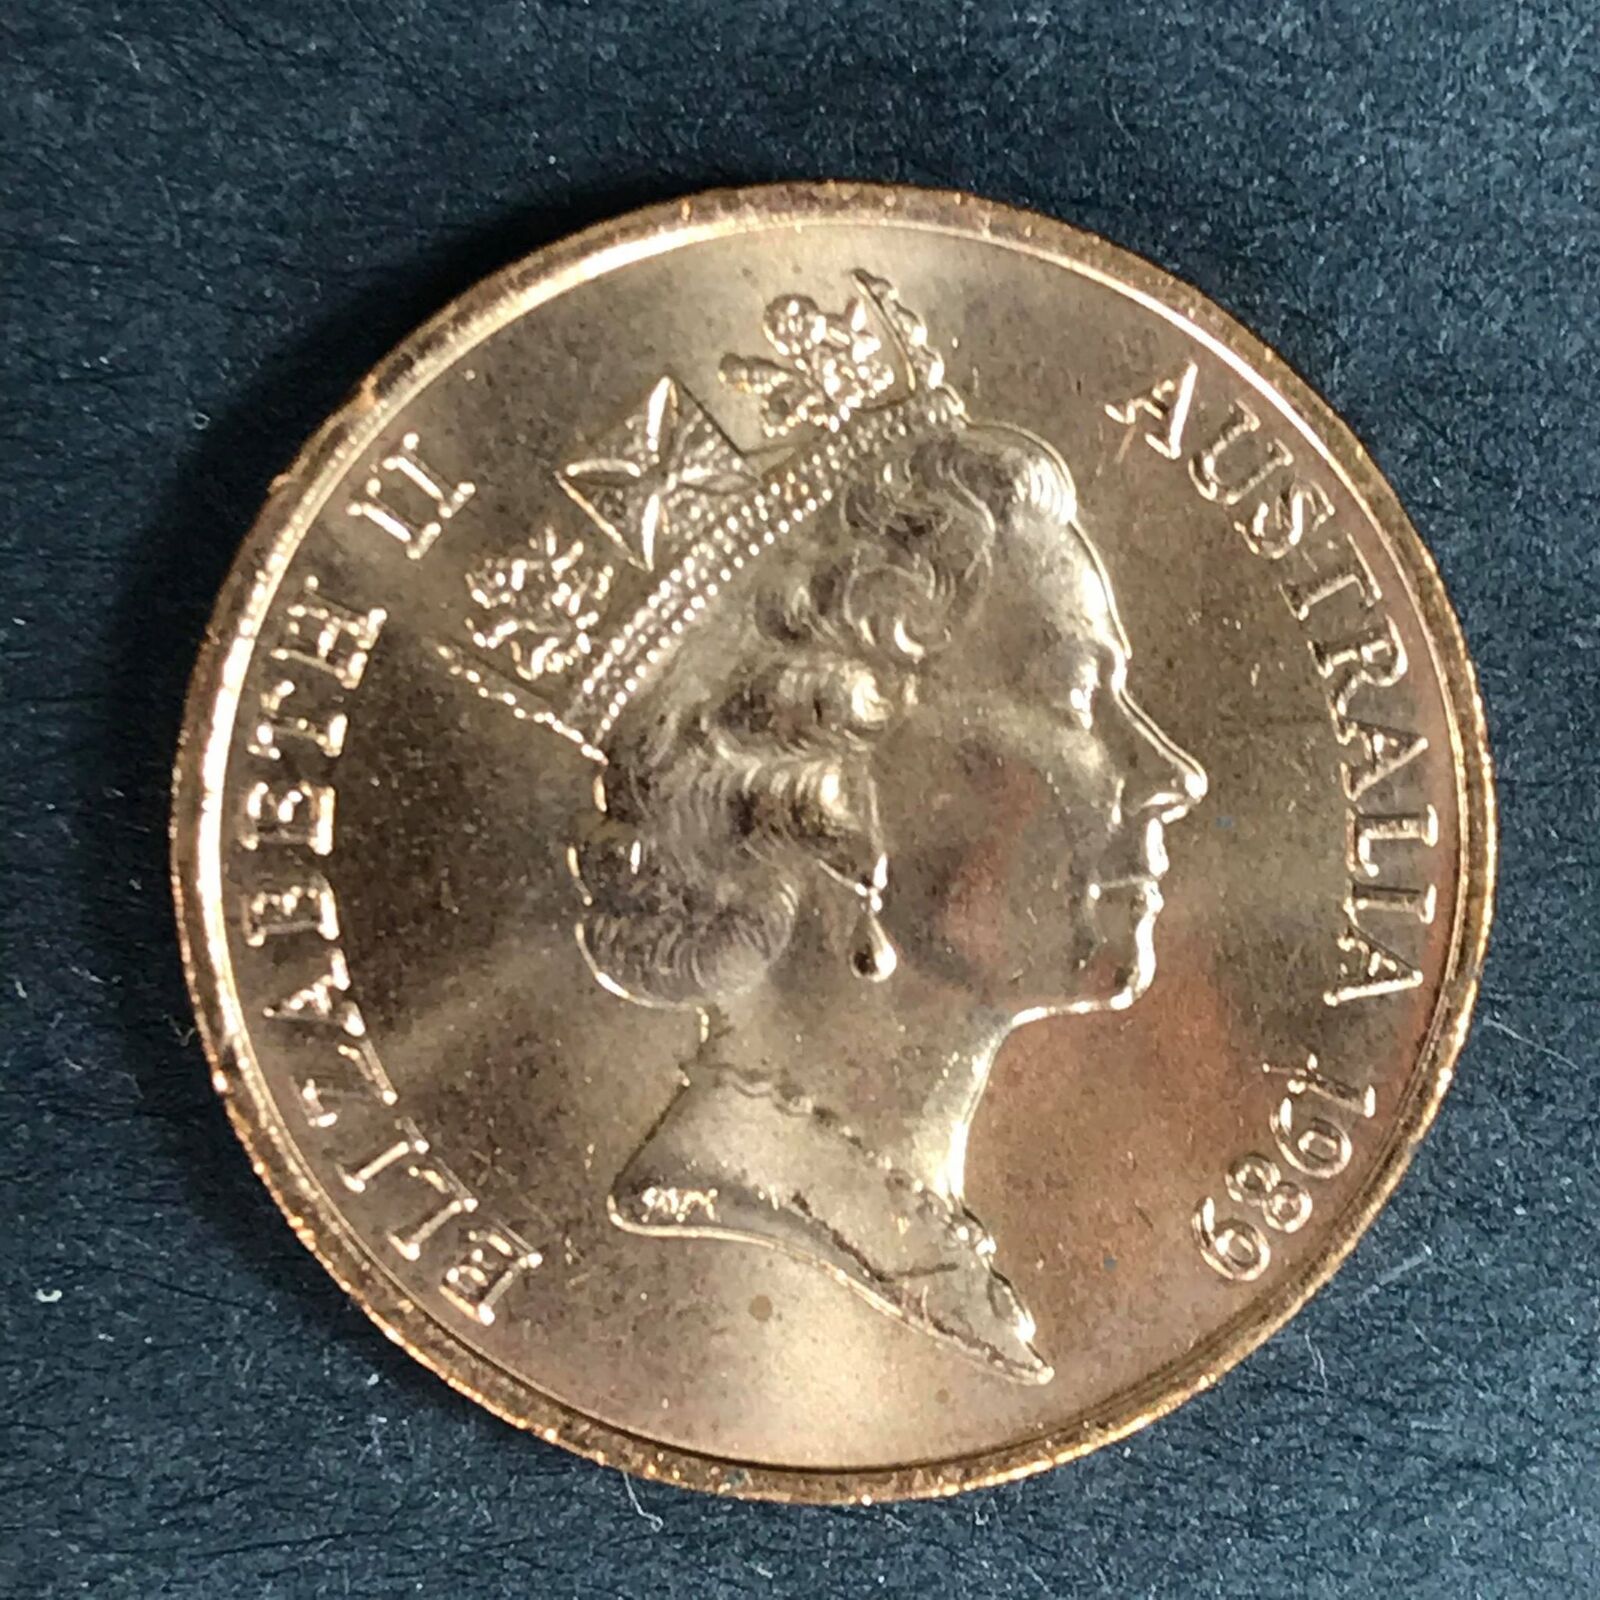 1989 2c Royal Australian Mint